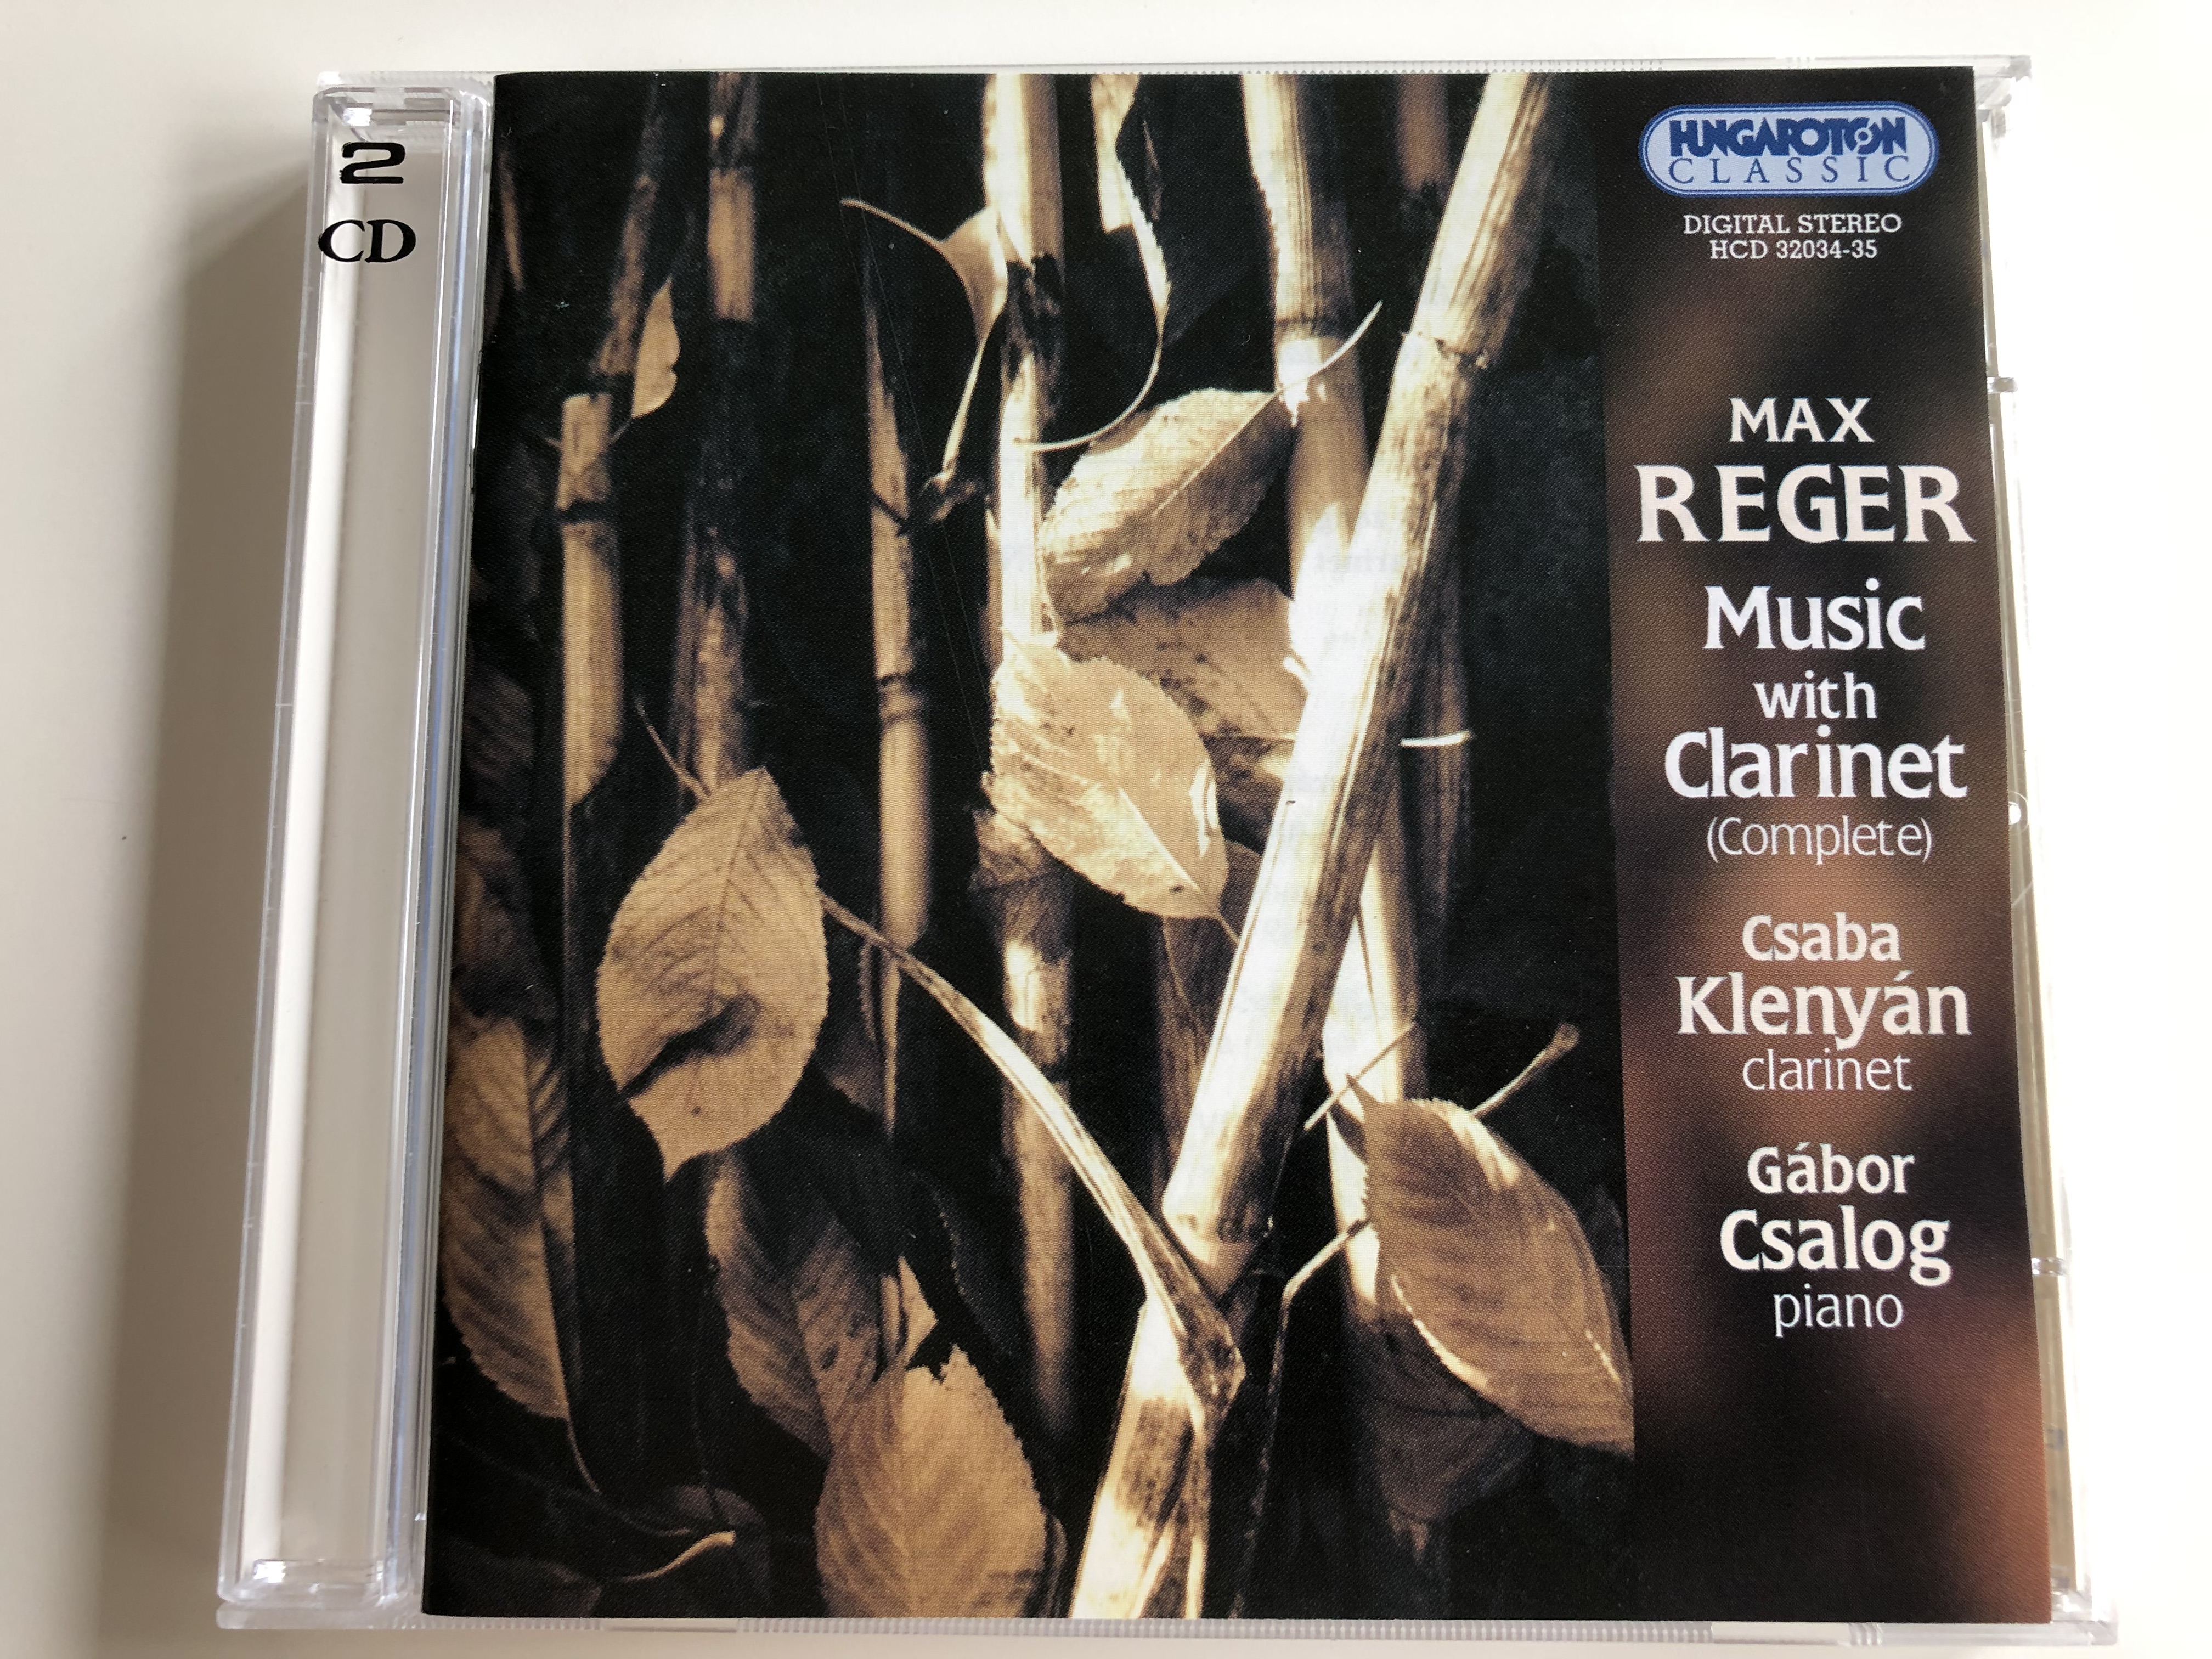 max-reger-music-with-clarinet-complete-csaba-kleny-n-clarinet-g-bor-csalog-piano-audio-cd-2001-hungaroton-classic-hcd-32034-35-1-.jpg